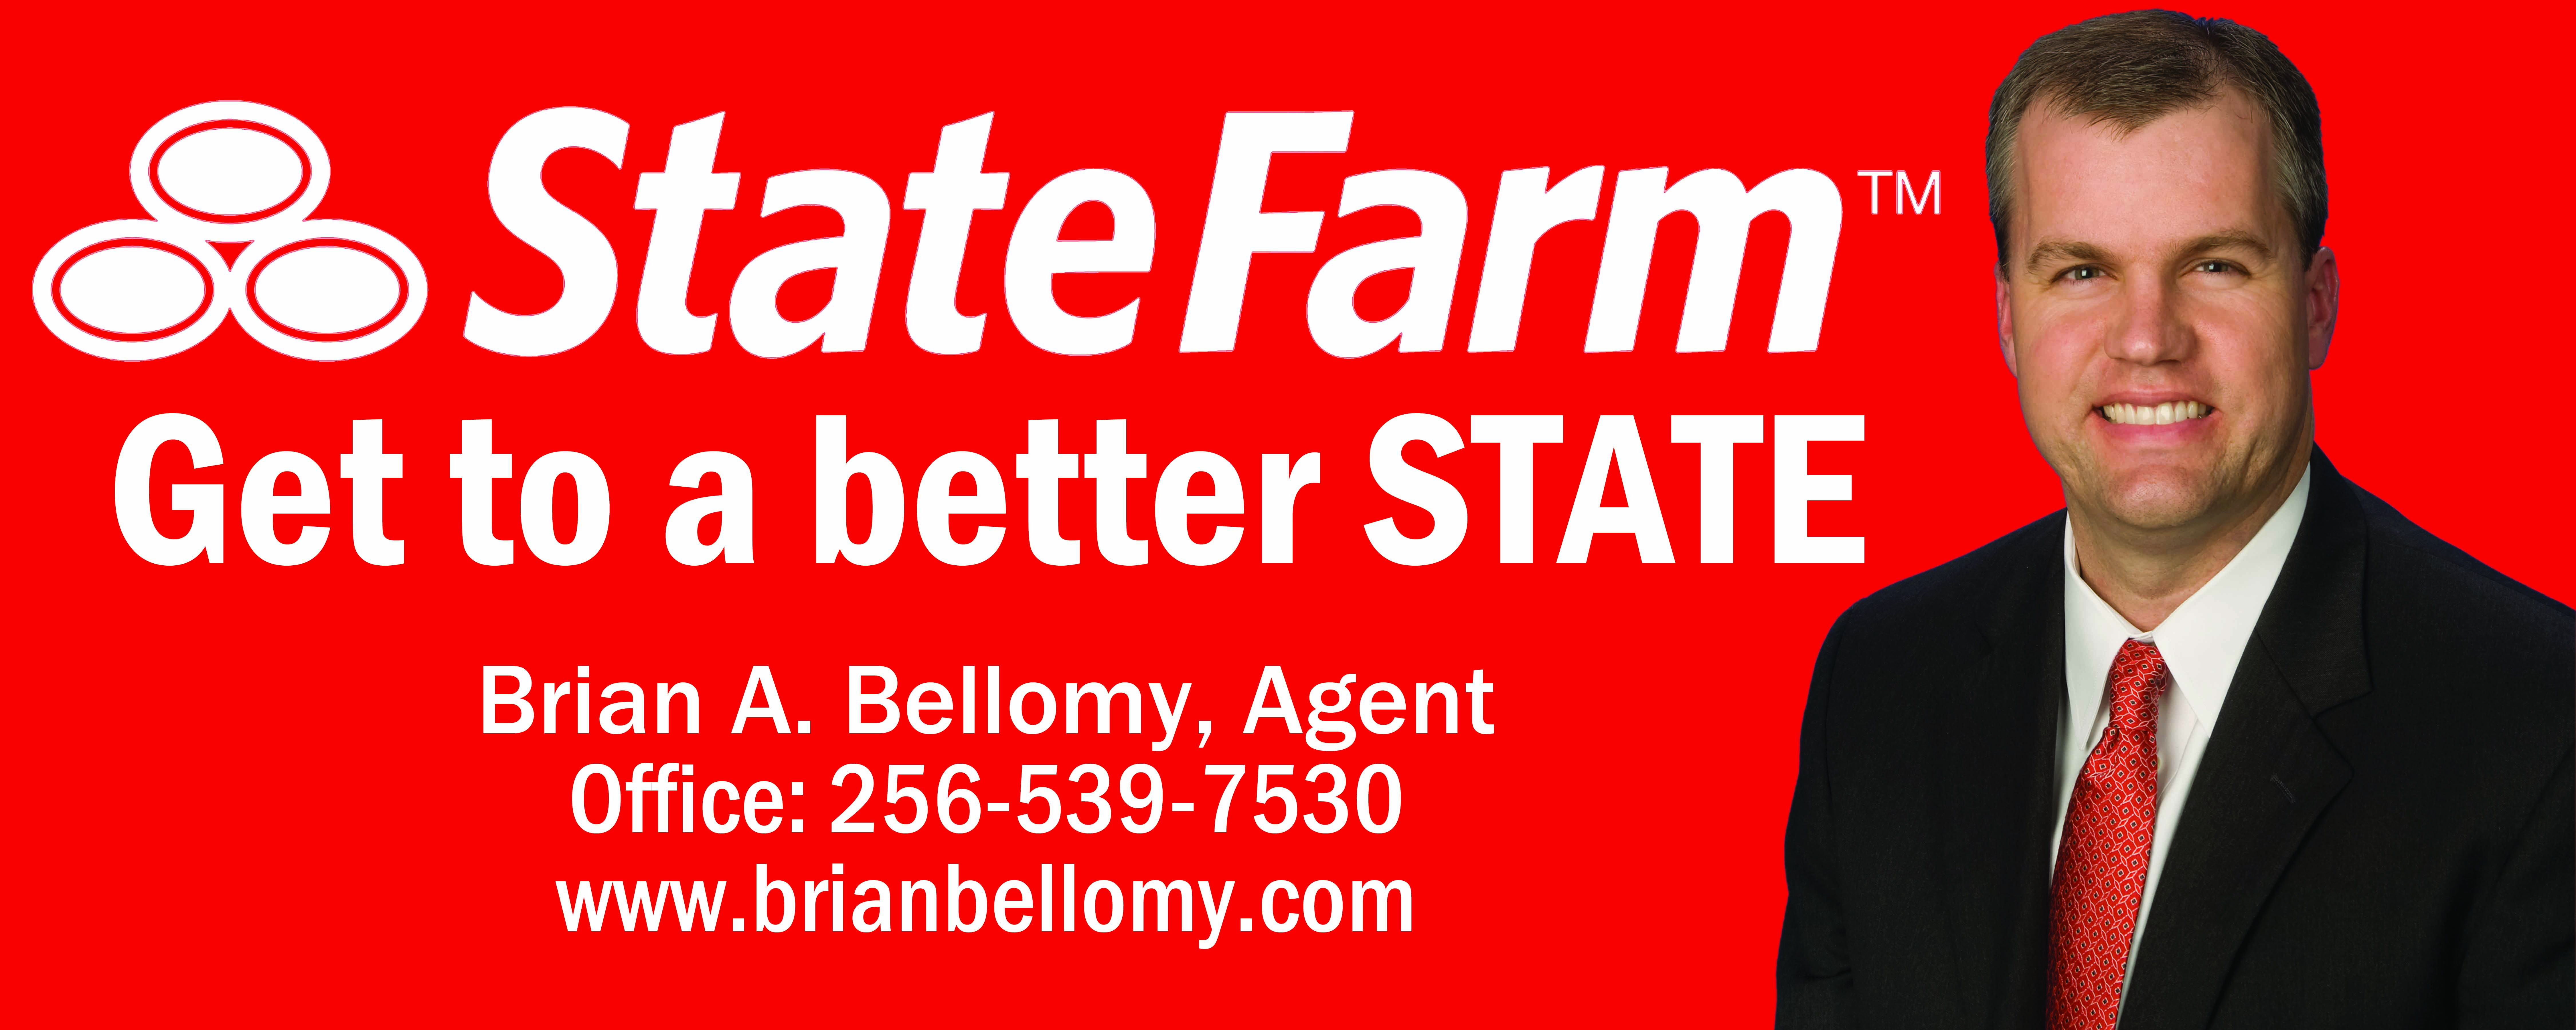 state farm agent job reviews